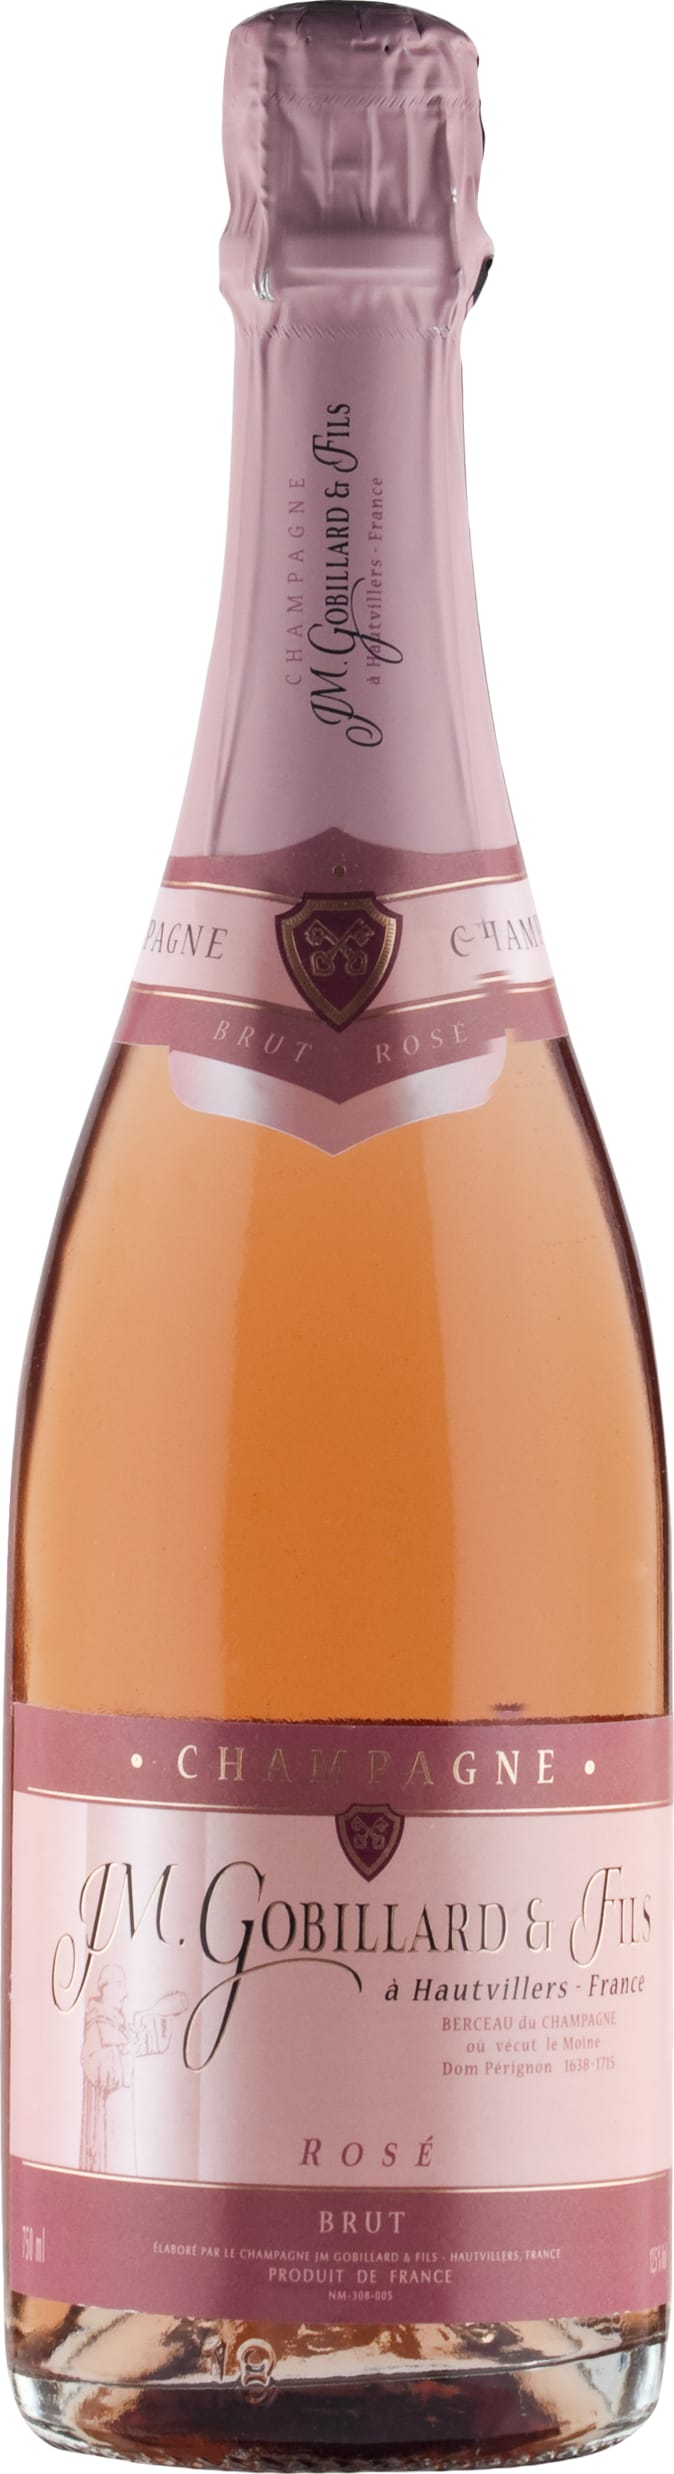 Gobillard Champagne Brut Rose 75cl NV - Buy Gobillard Wines from GREAT WINES DIRECT wine shop